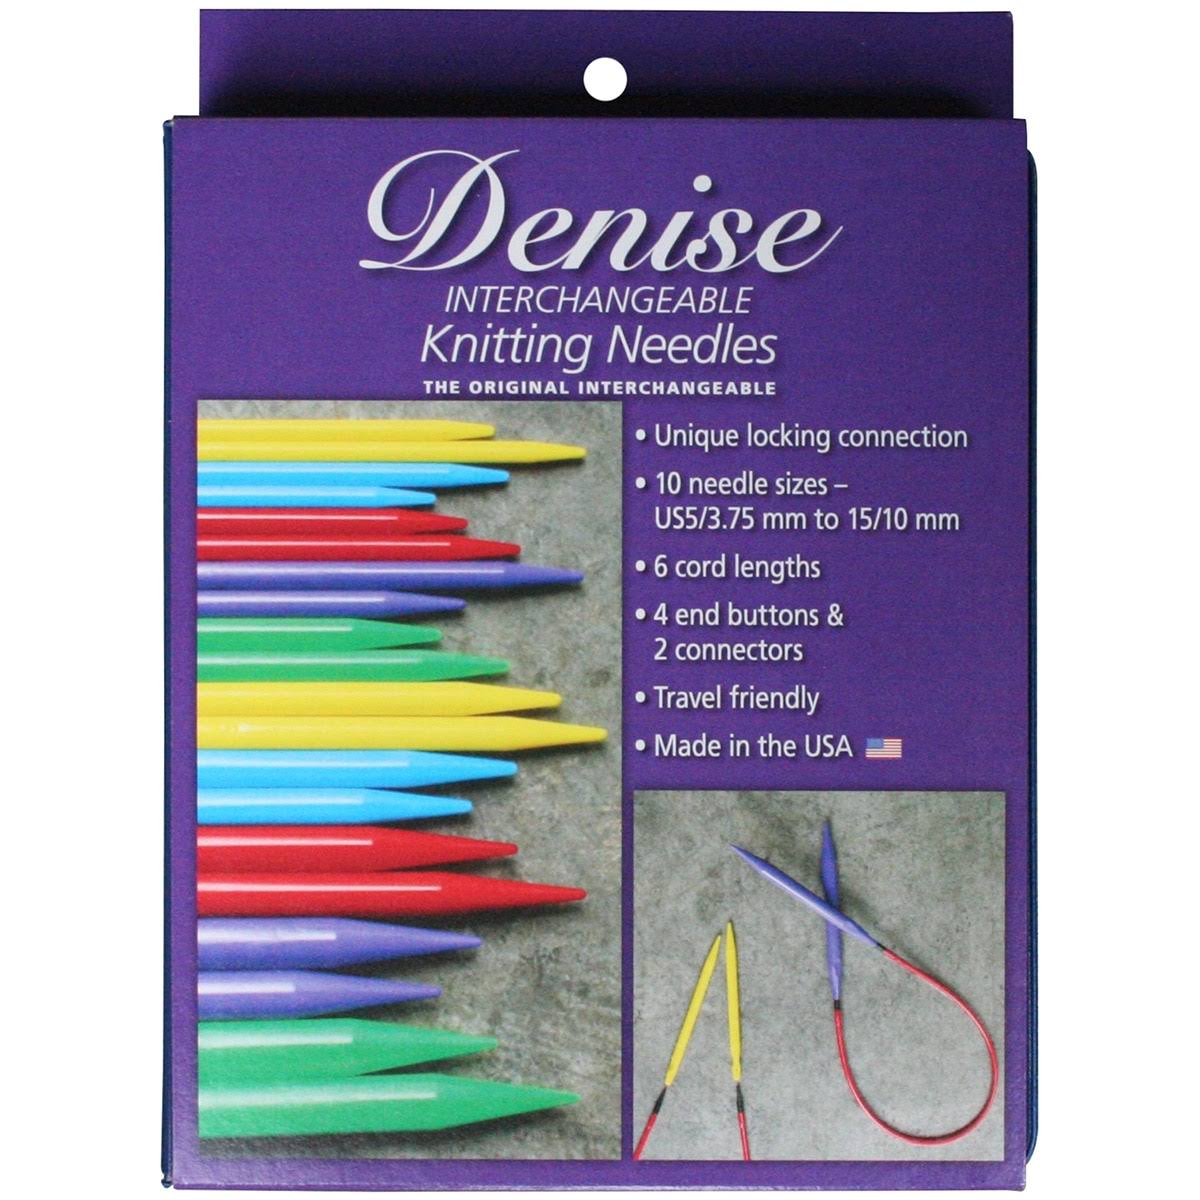 Denise Interchangeable Knitting Needles Kit Blue w/Primary Needles